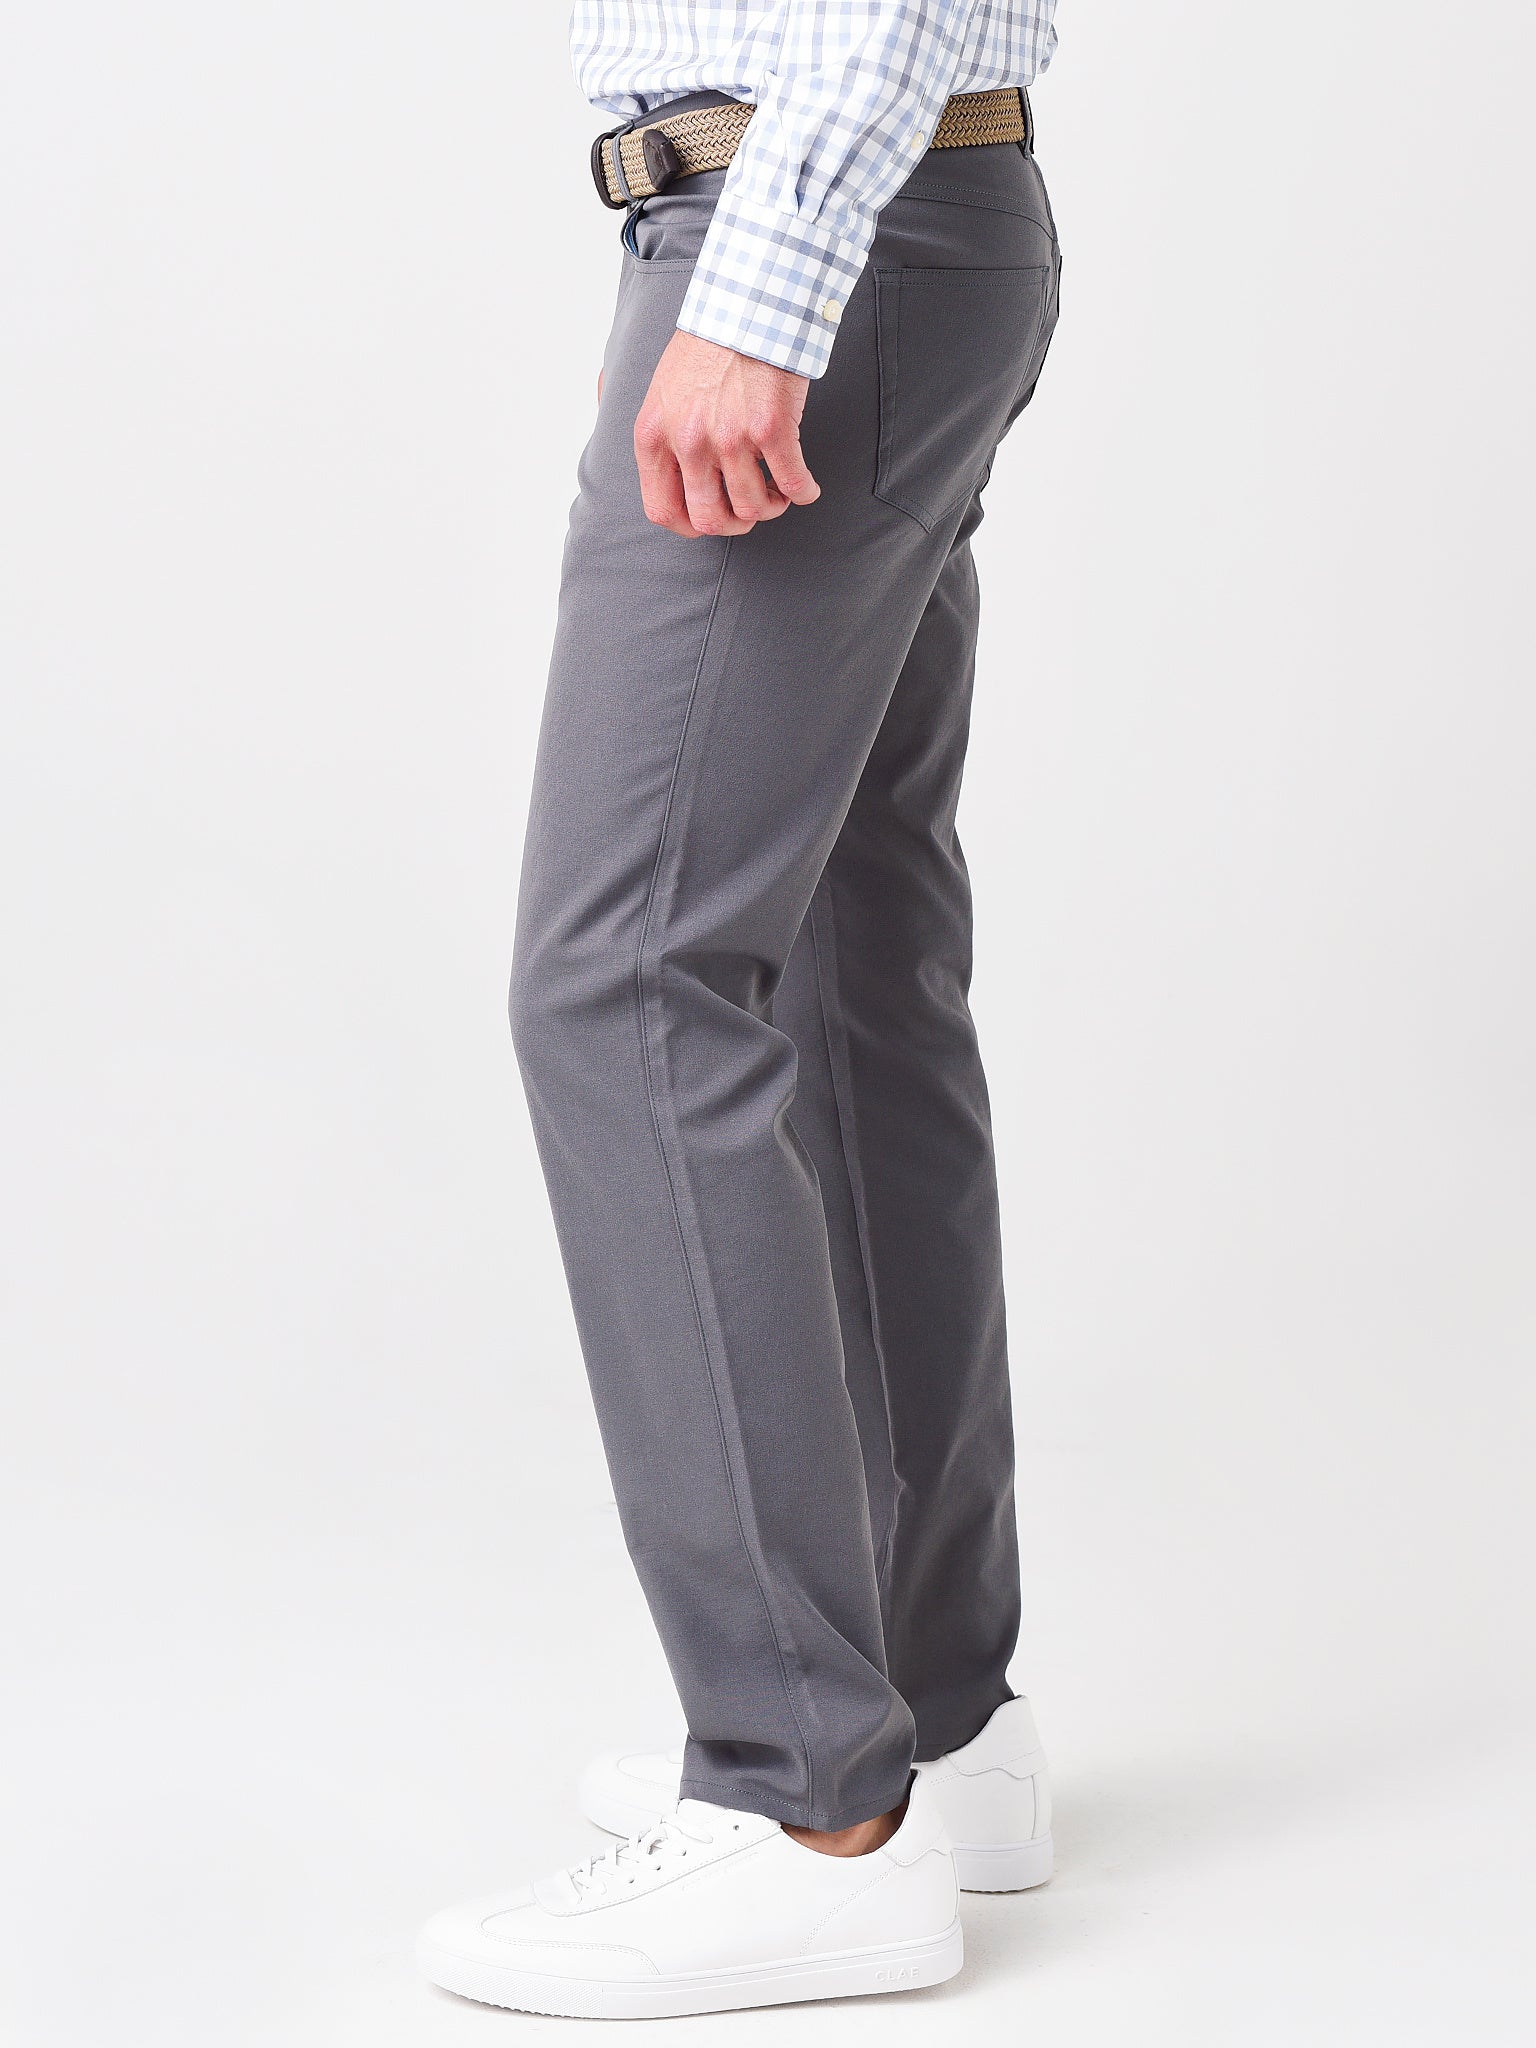 Peter Millar EB66 Performance Five-Pocket Pant: British Tan - Craig Reagin  Clothiers